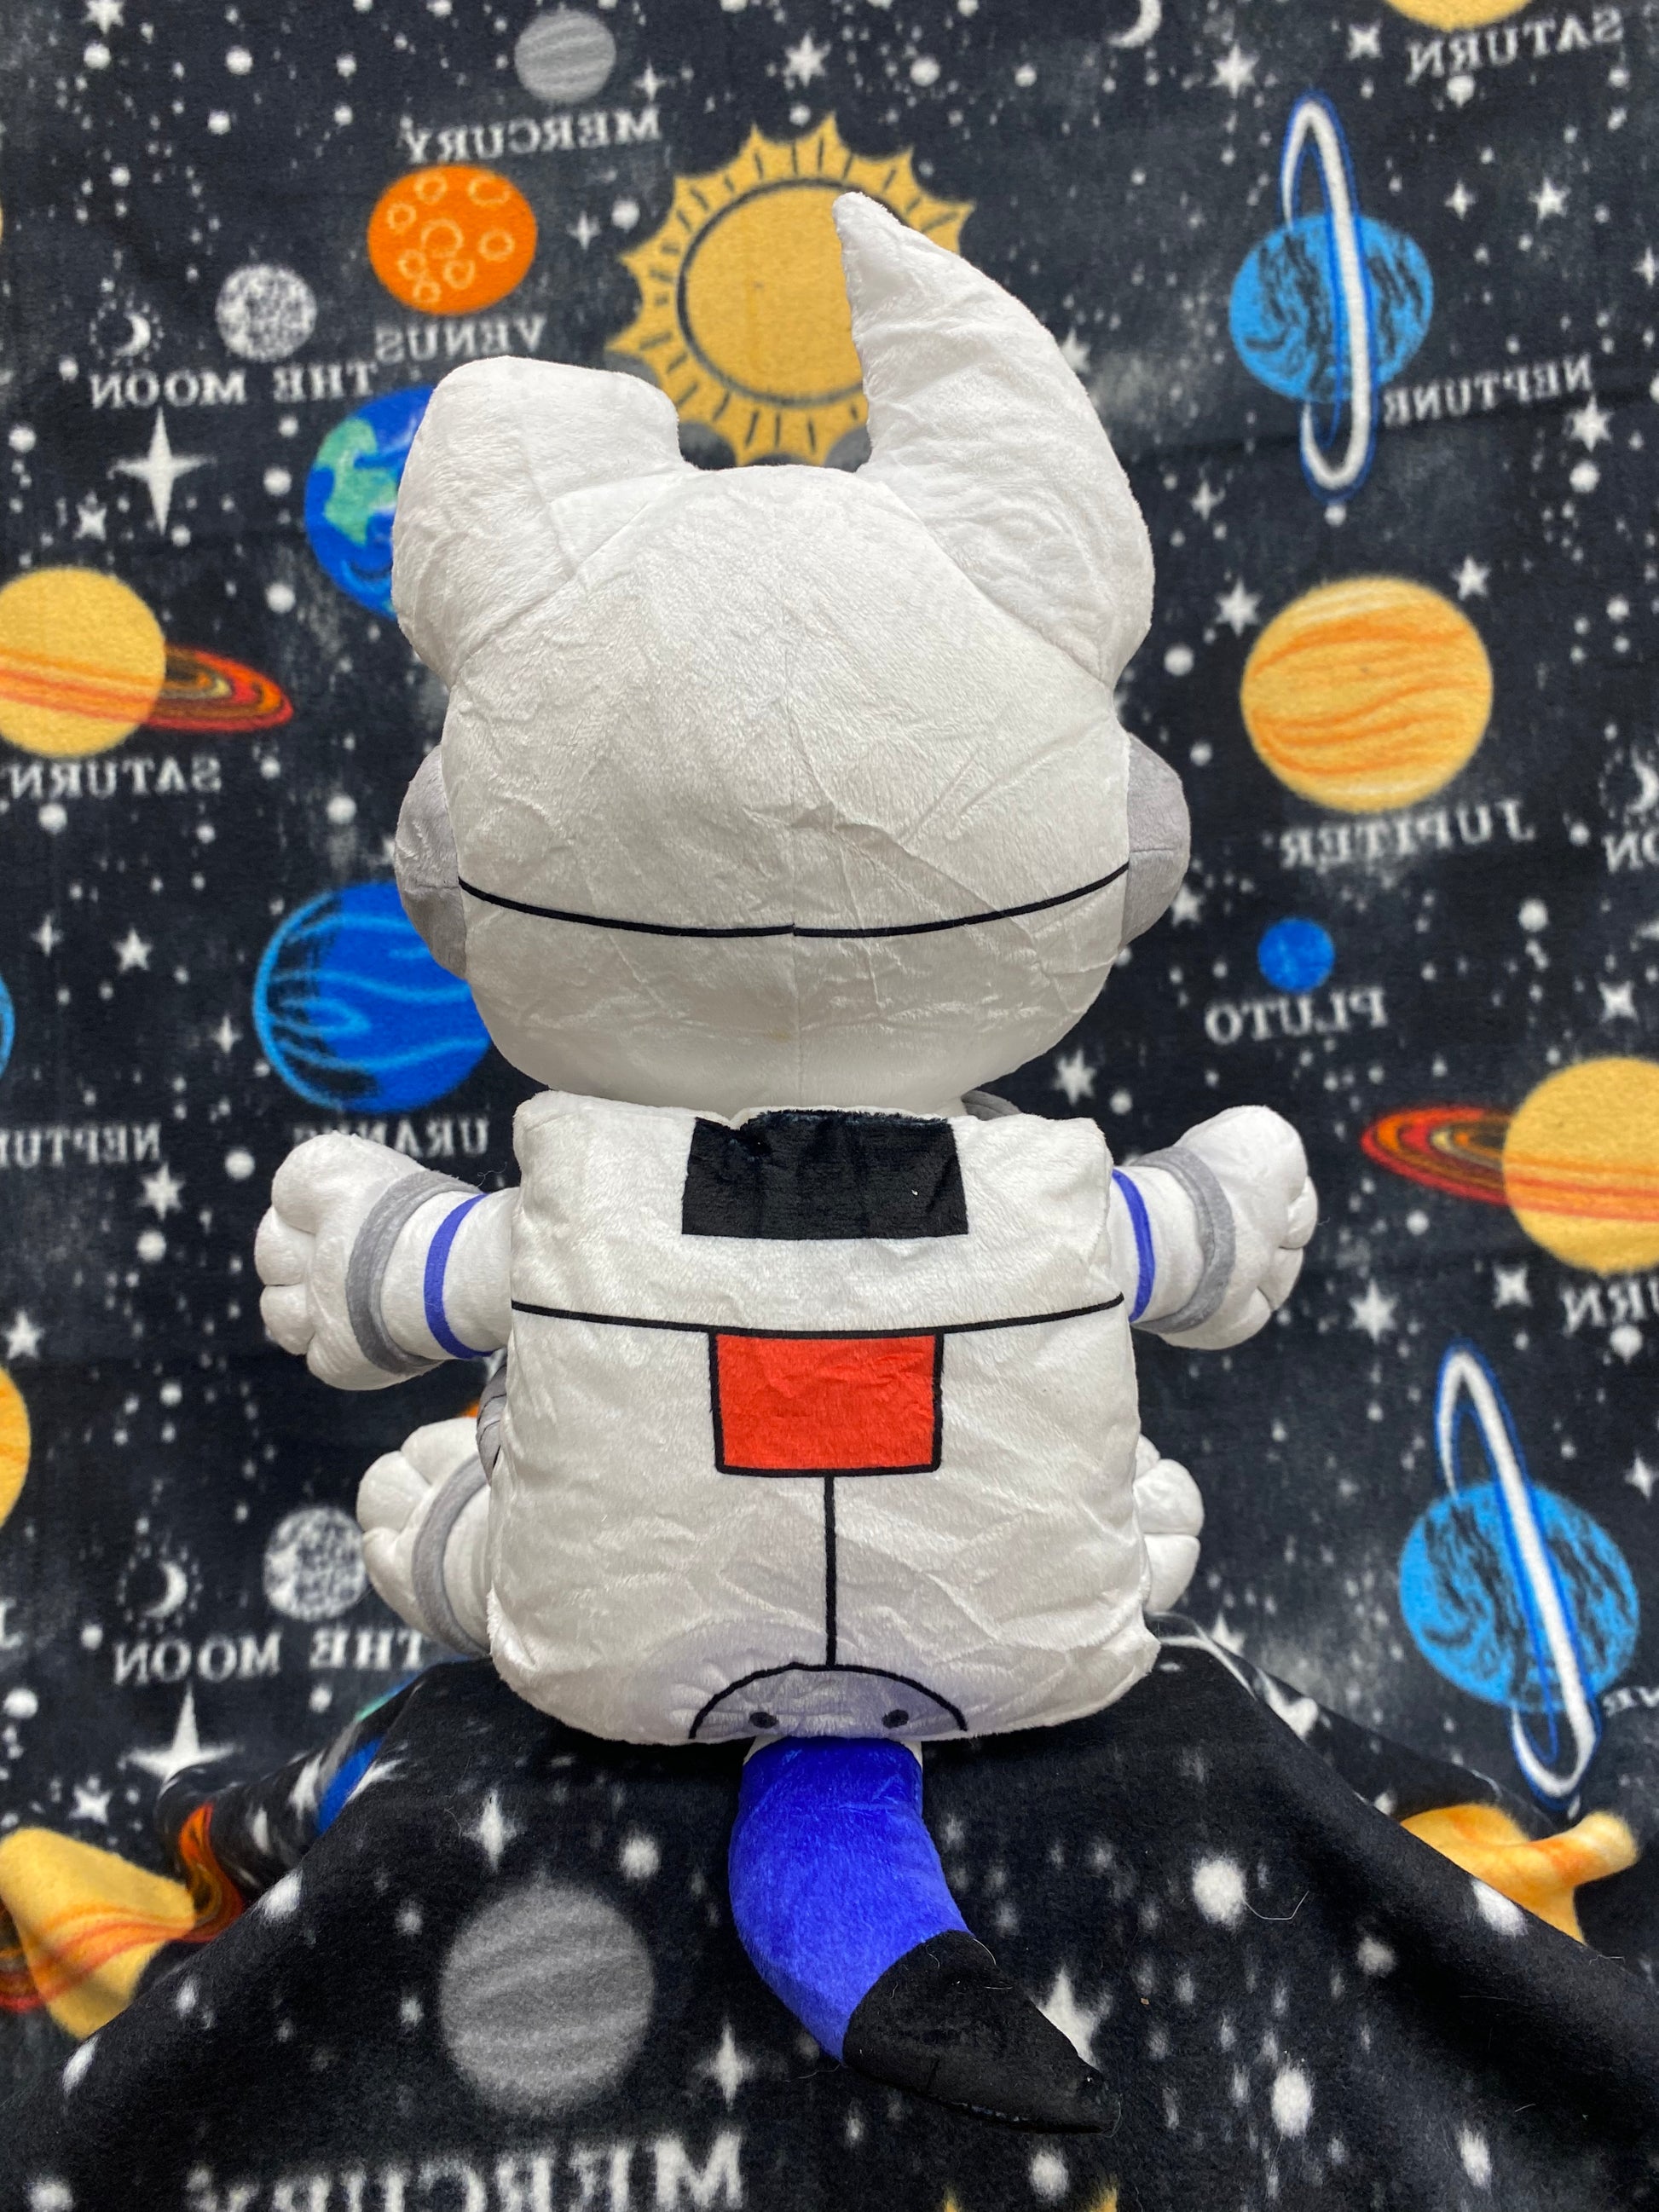 Space Buddies- Astro Dog – Creep Cat Toy Company